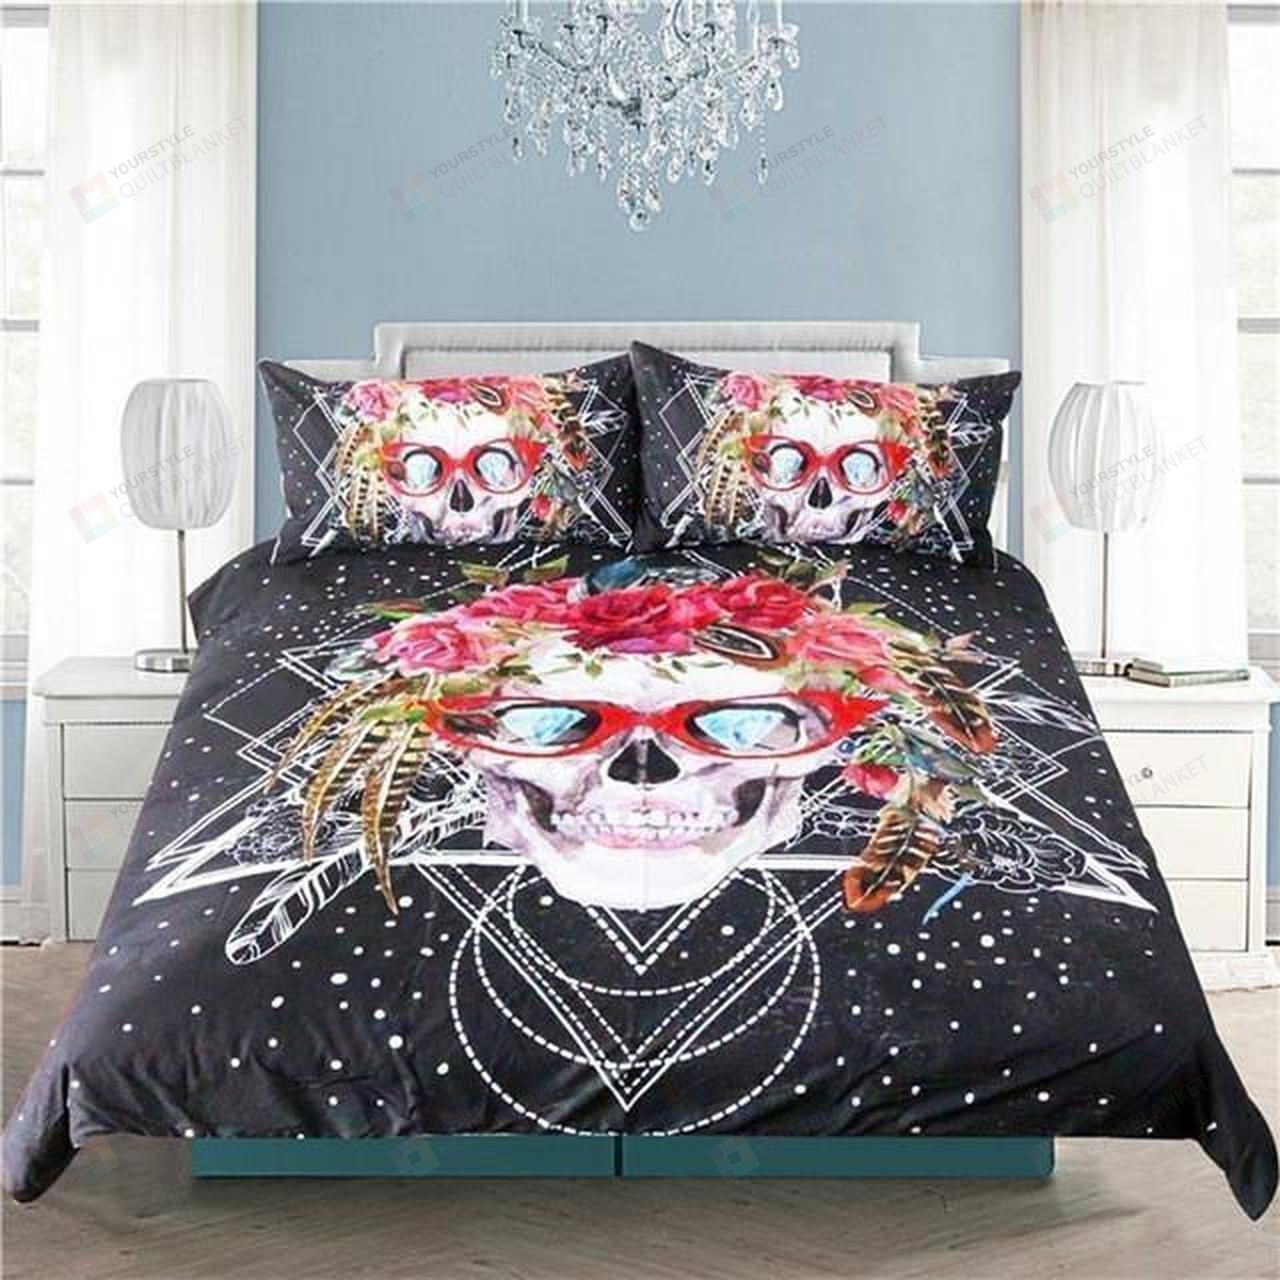 Cool Floral Skull Bedding Set (Duvet Cover & Pillow Cases)